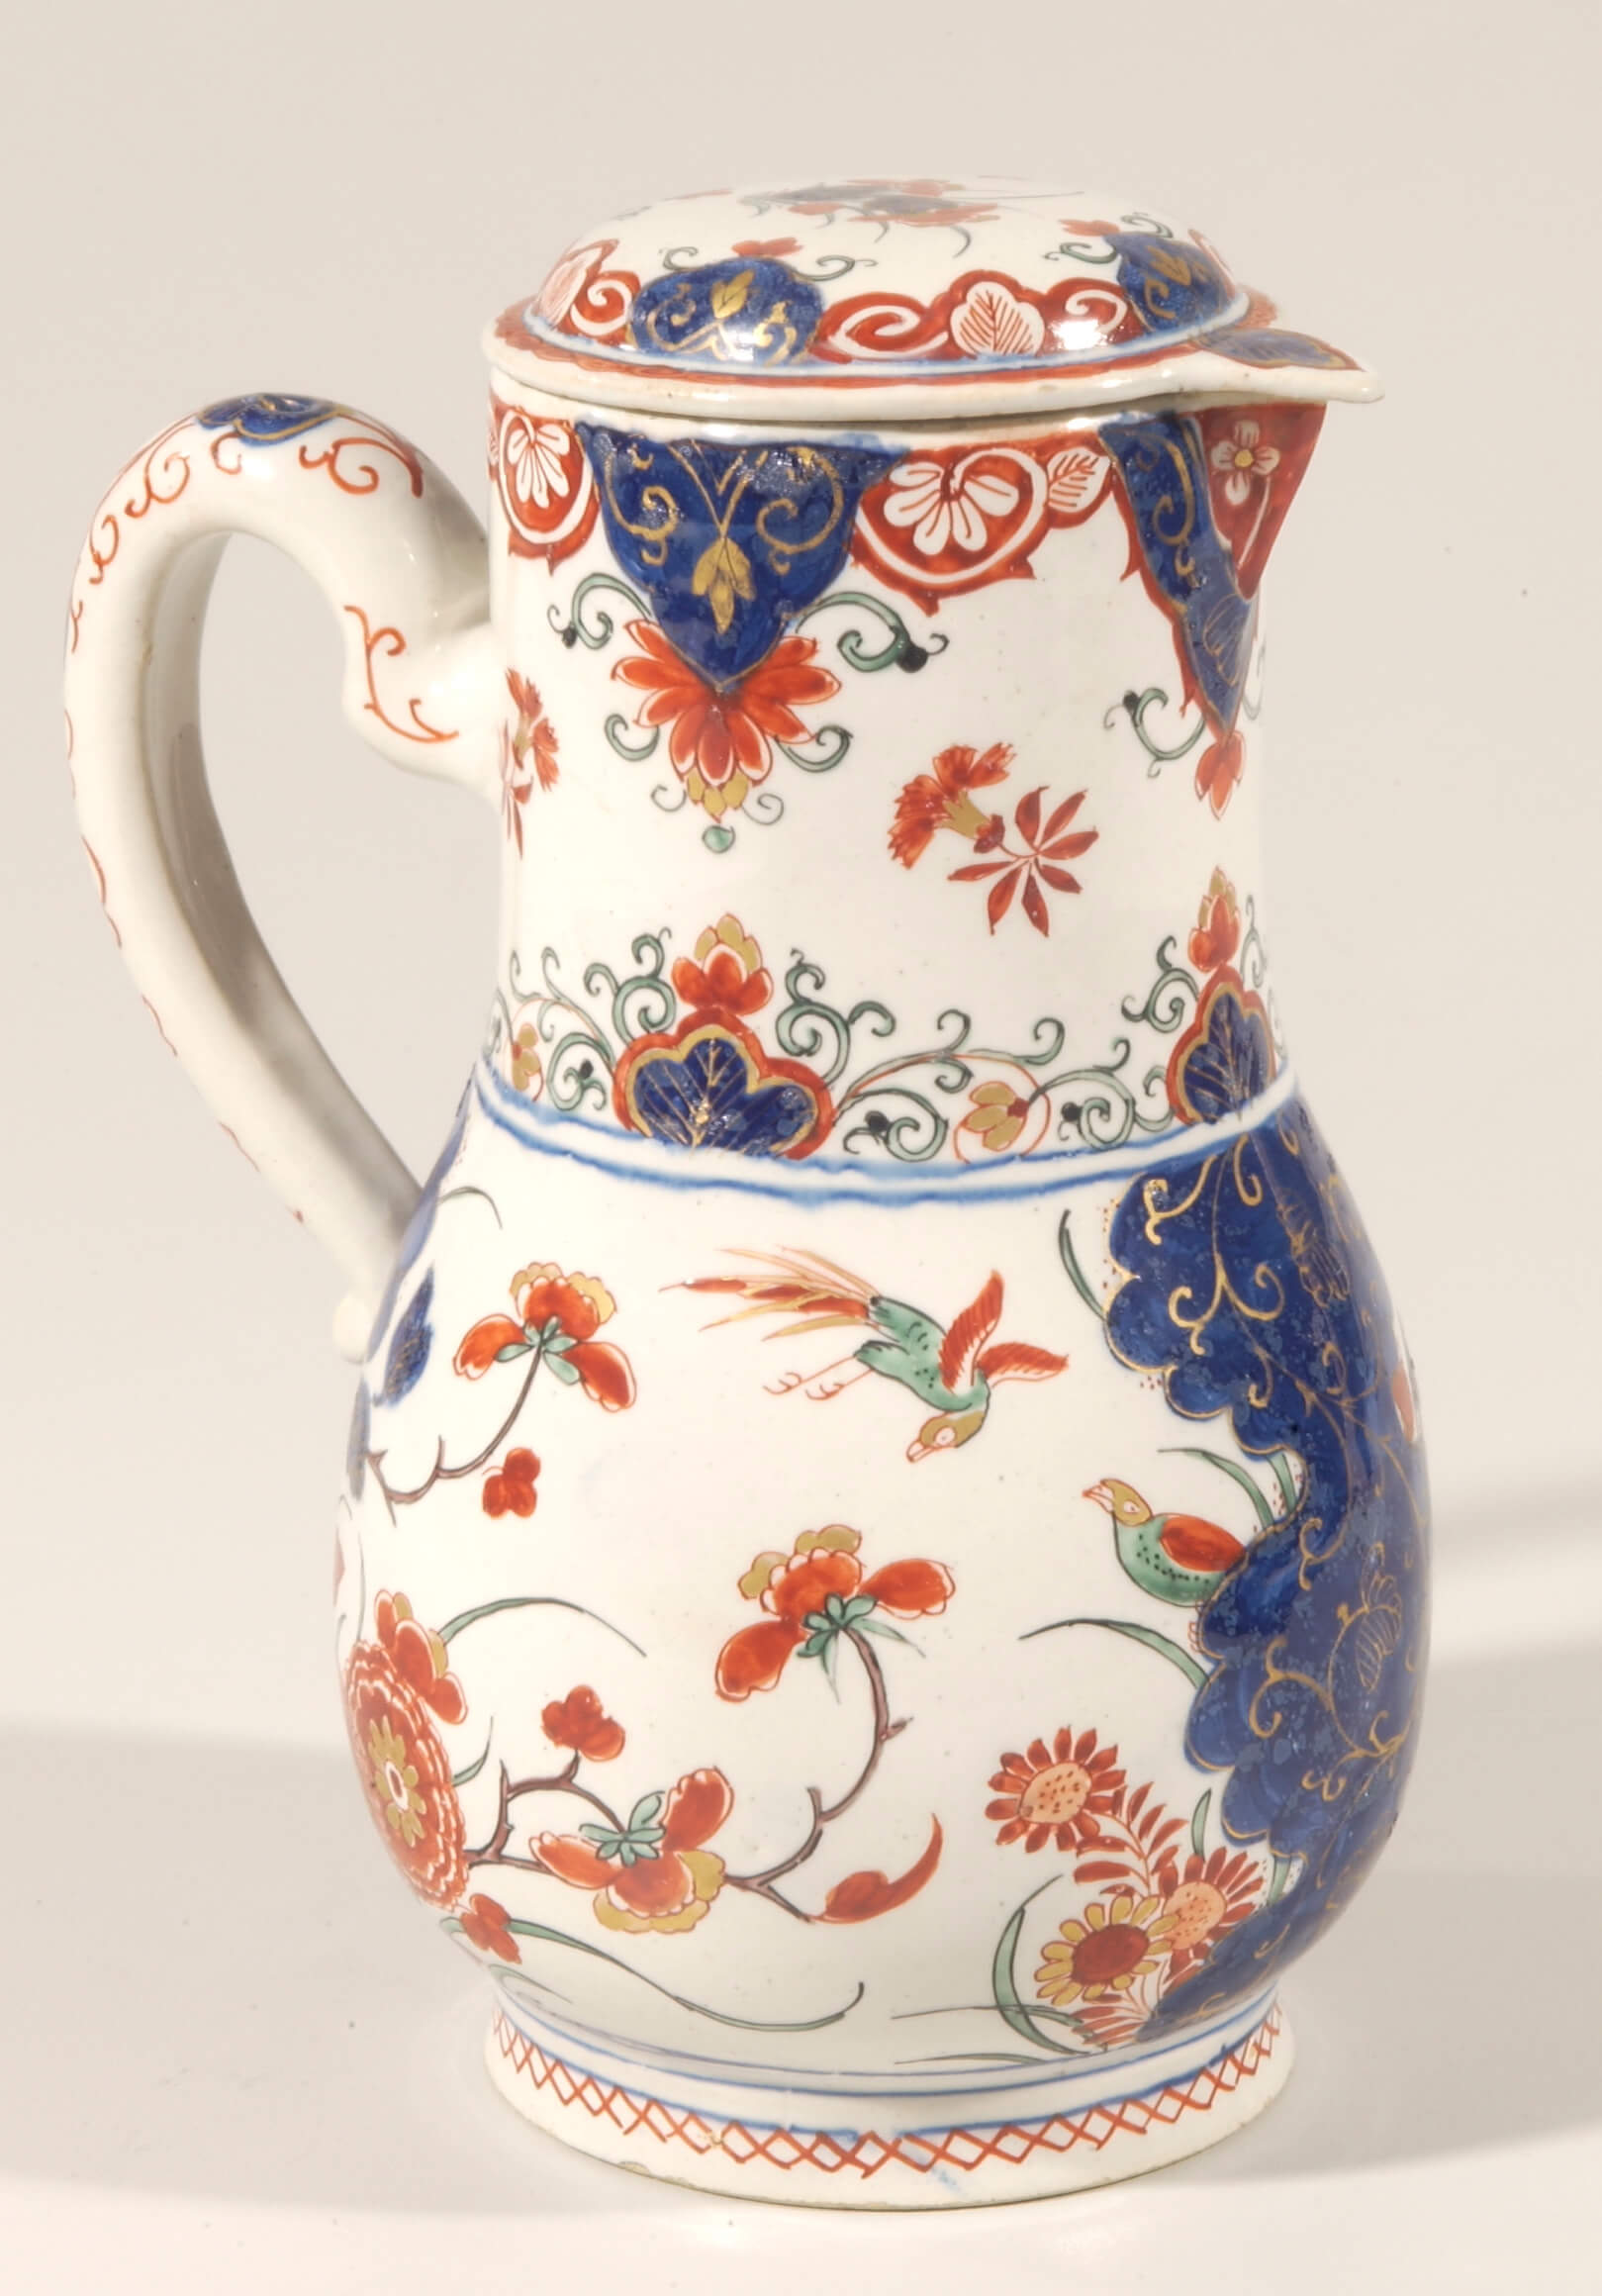 Antique polychrome jug with cover